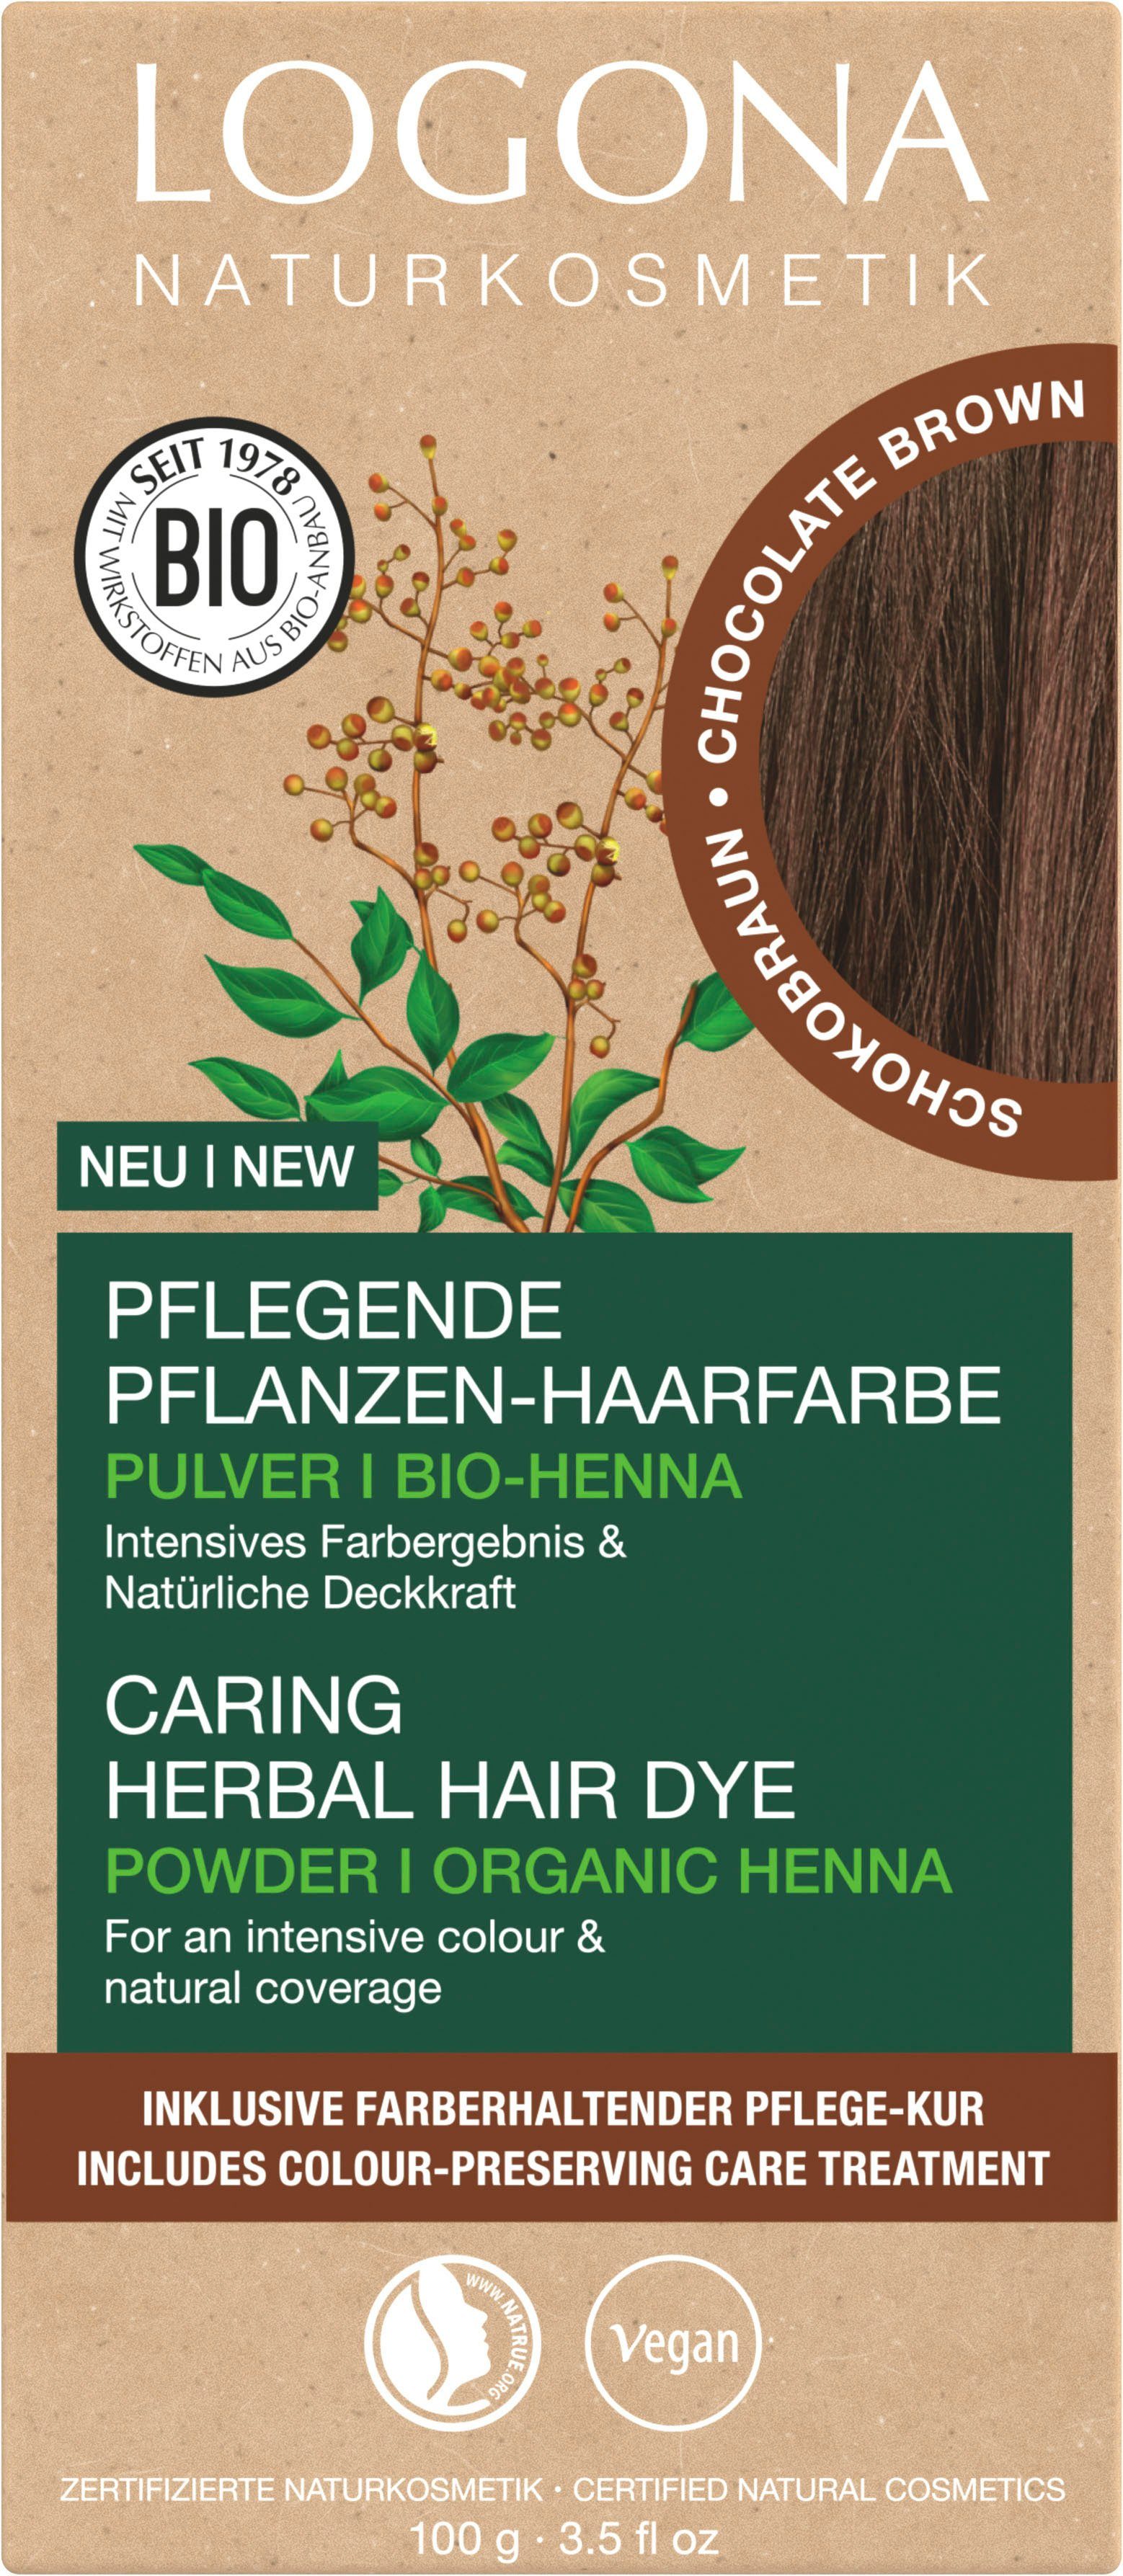 Haarfarbe Pflanzen-Haarfarbe Schokobraun LOGONA 09 Pulver